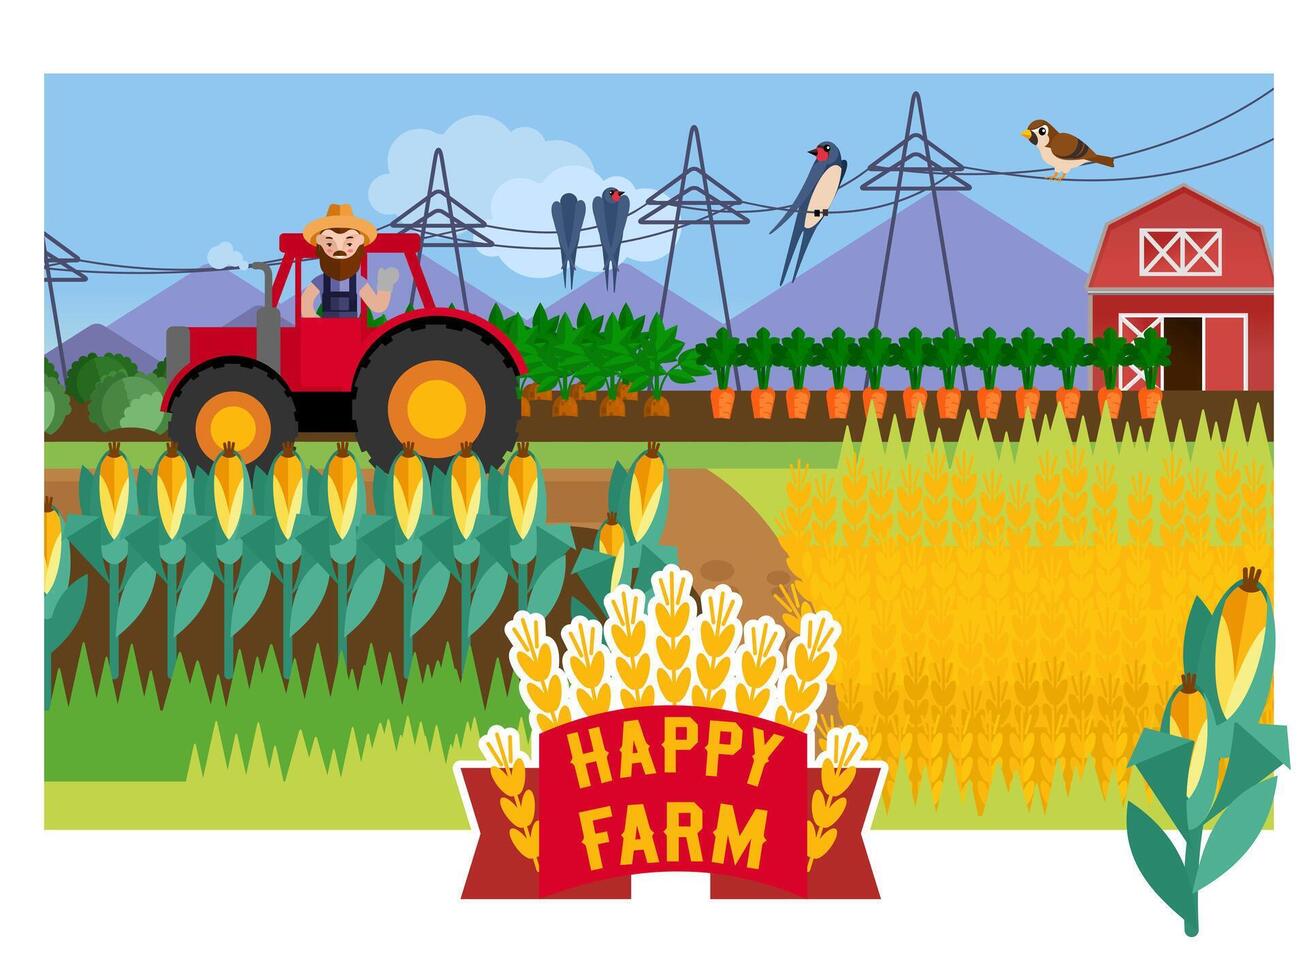 Happy farm. Farm work, farmer on tractor harvesting crops. vector